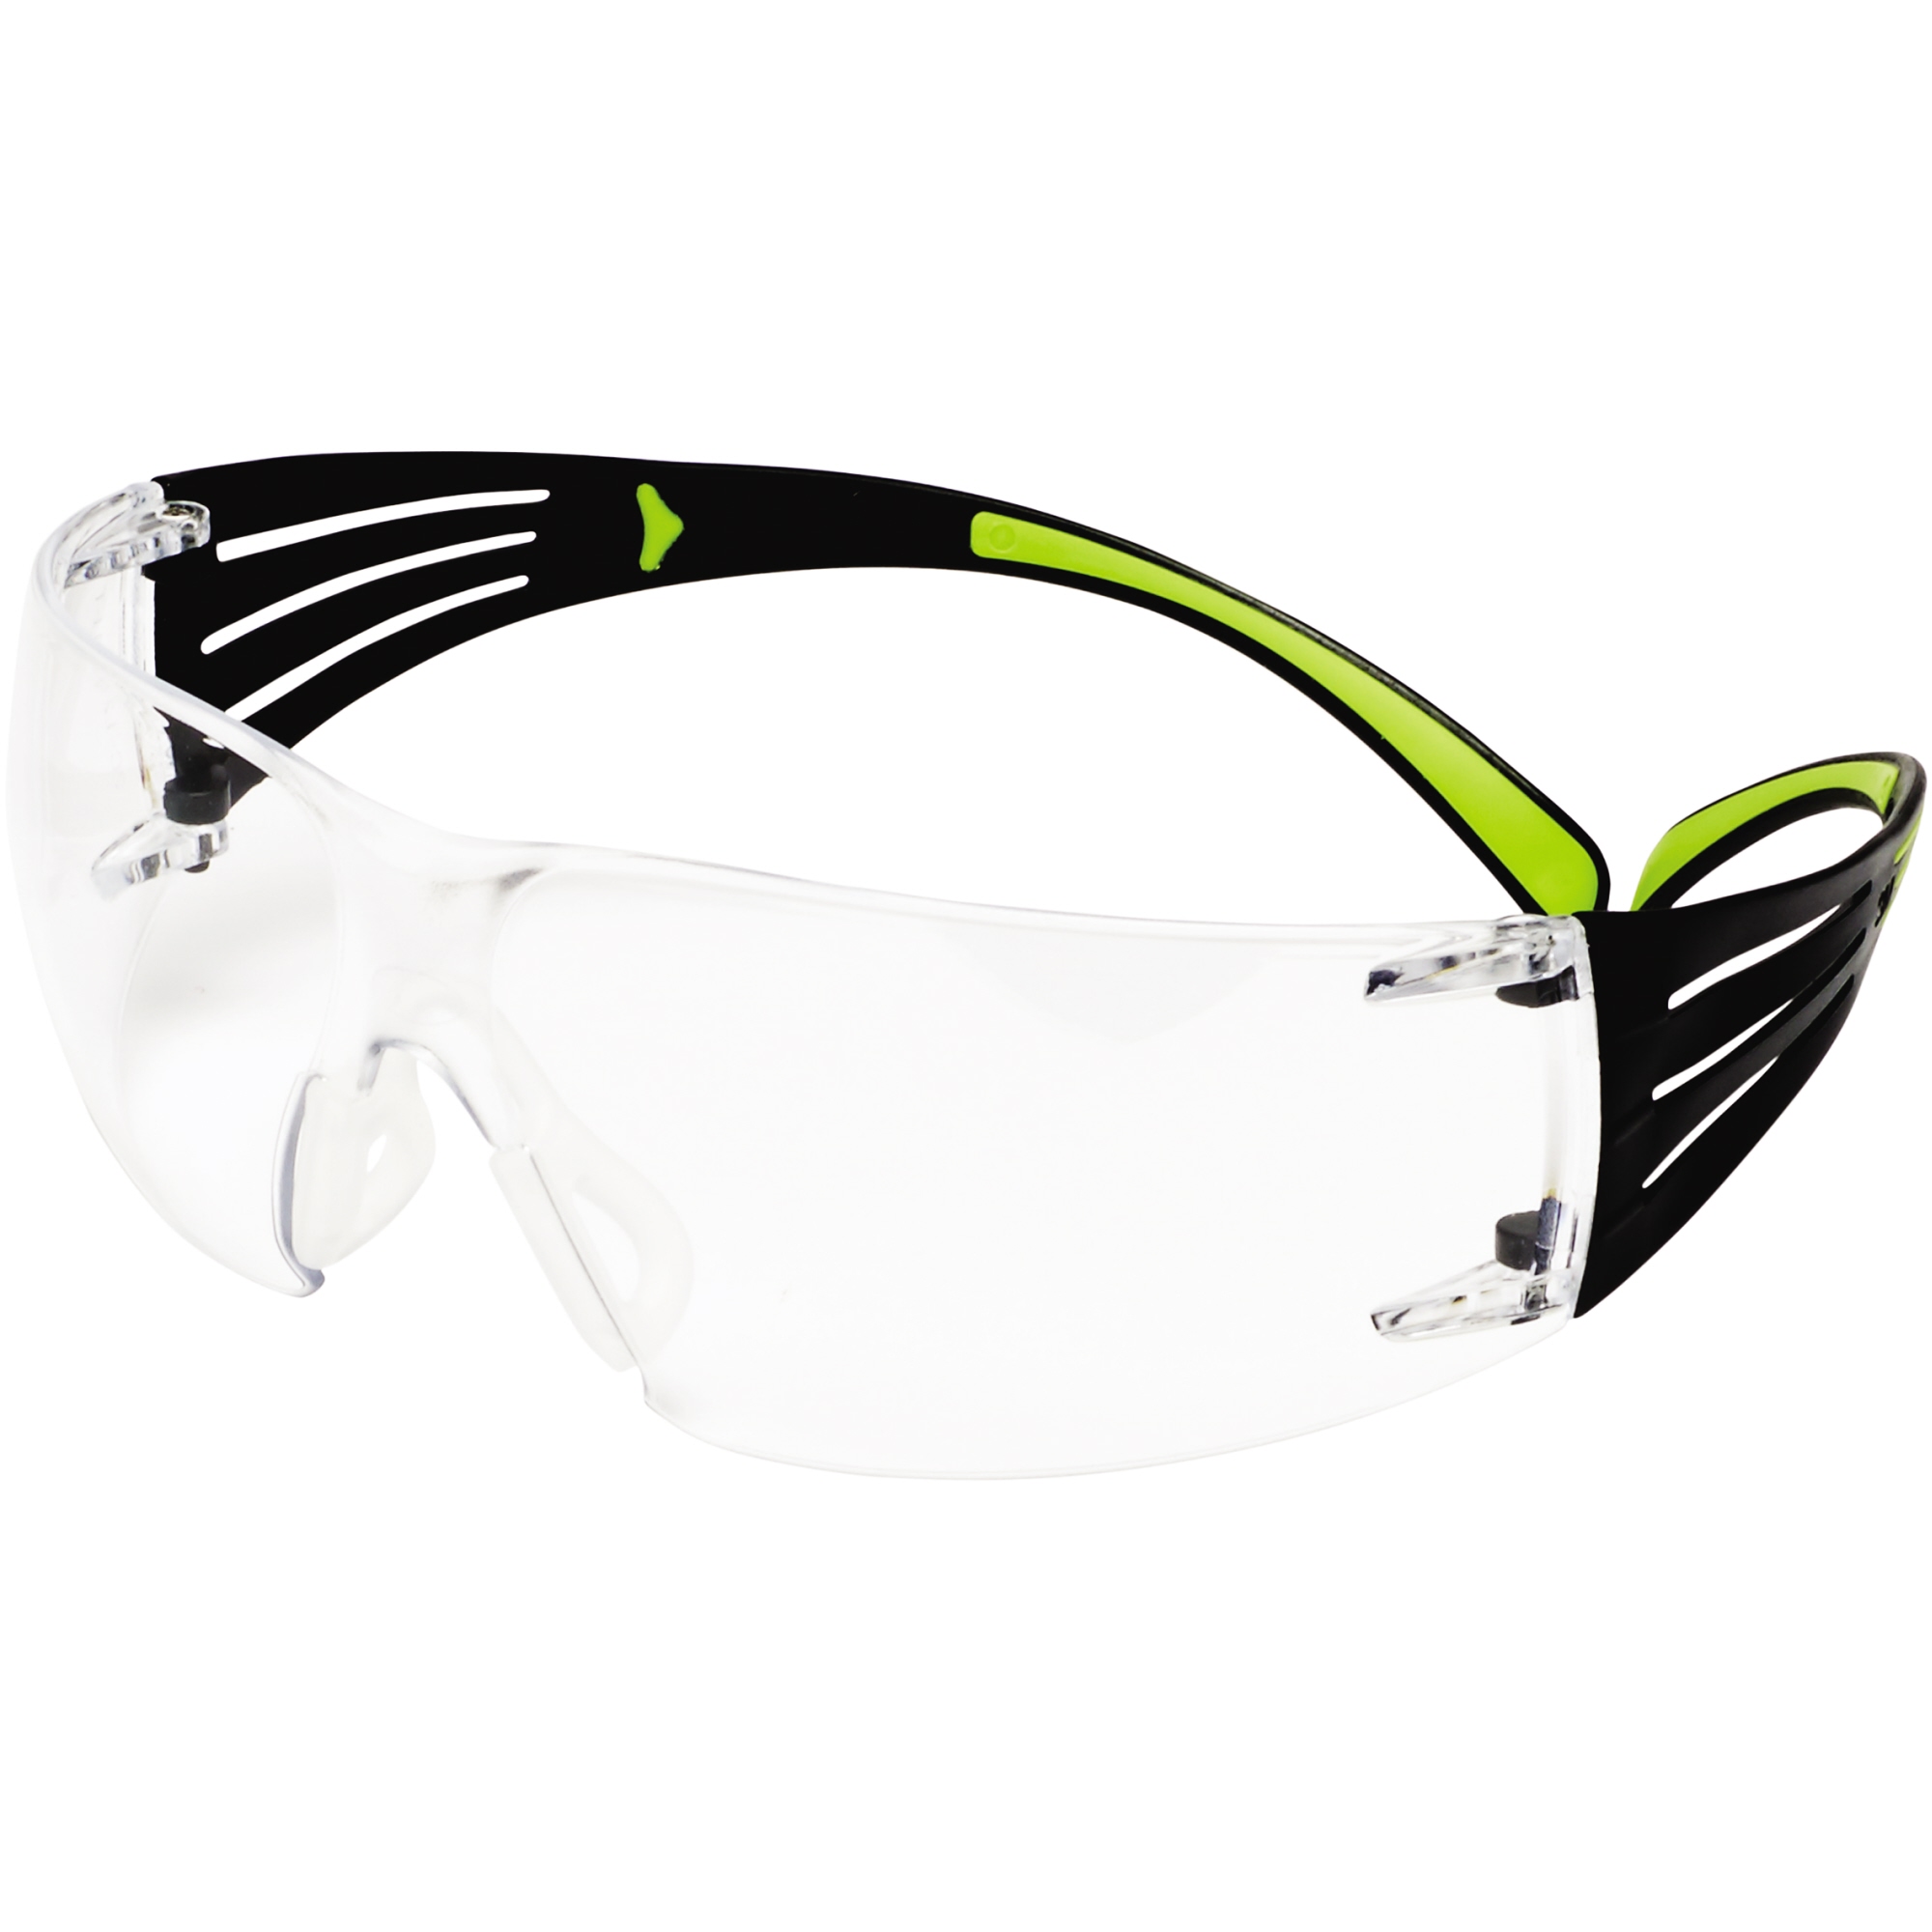 3M™ Schutzbrille SecureFit 400 Polycarbonat glasklar